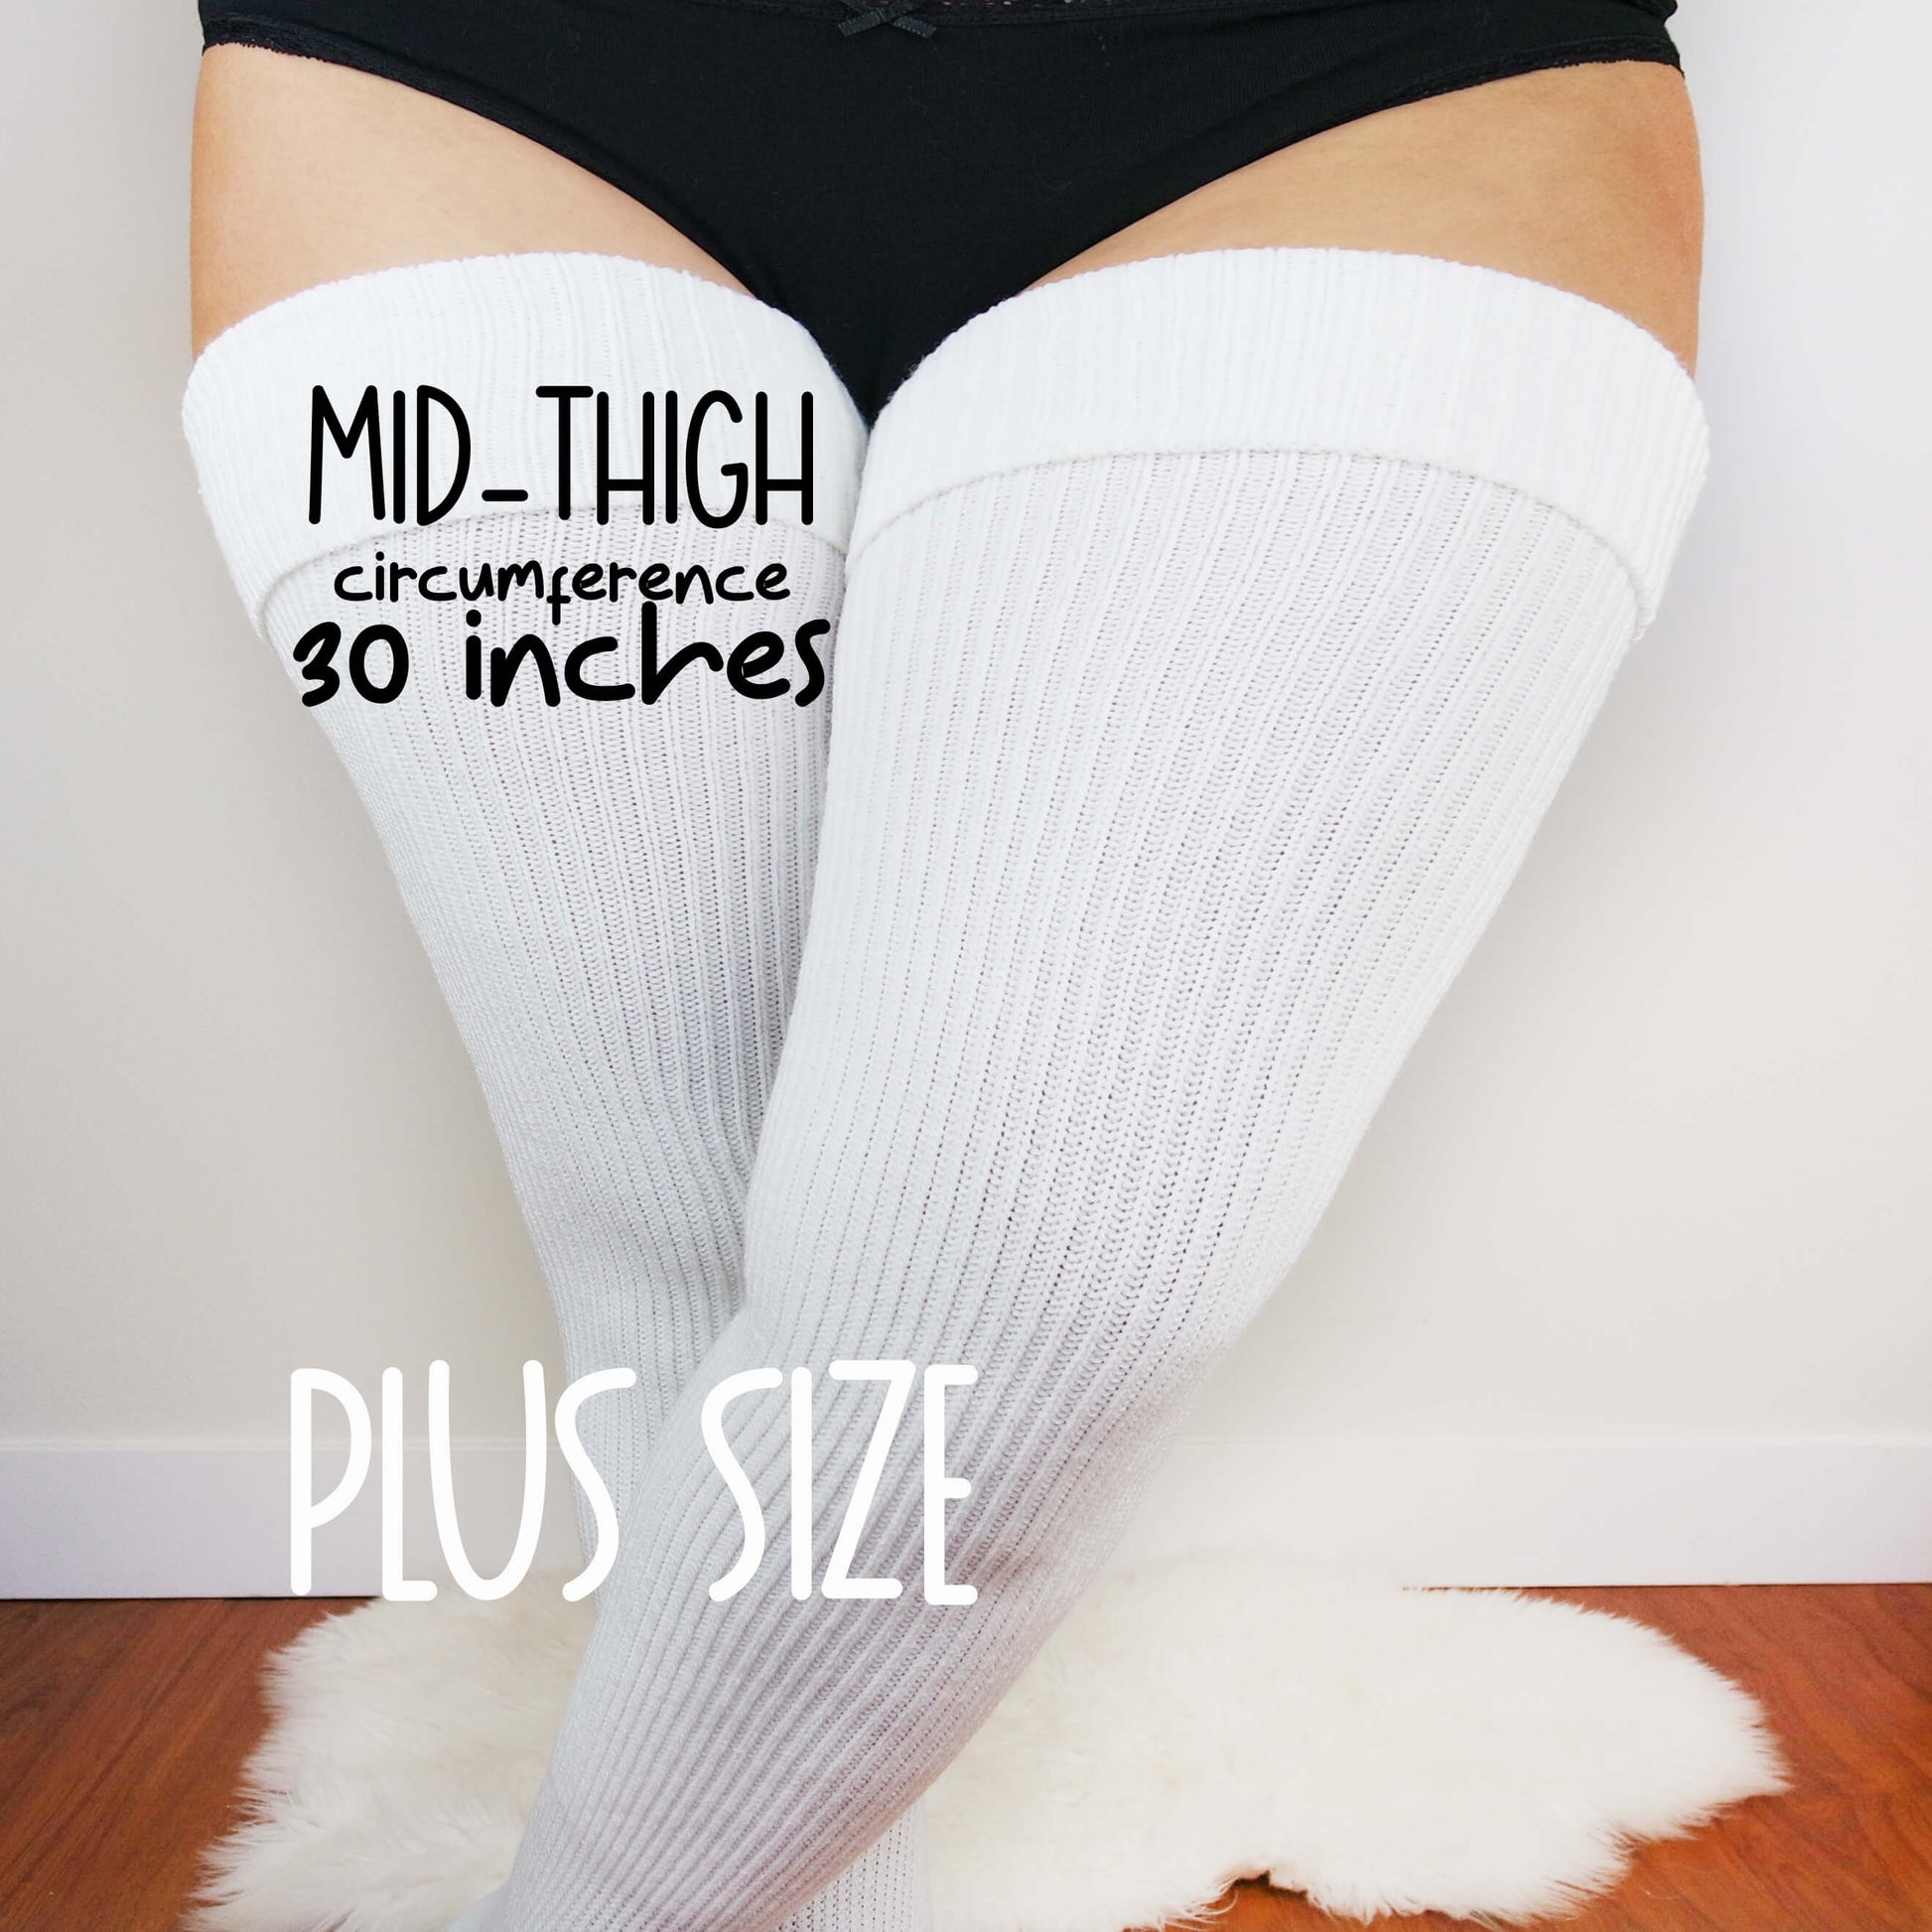 Women's Plus-Size Tights, Plus-Size & Curve Hosiery